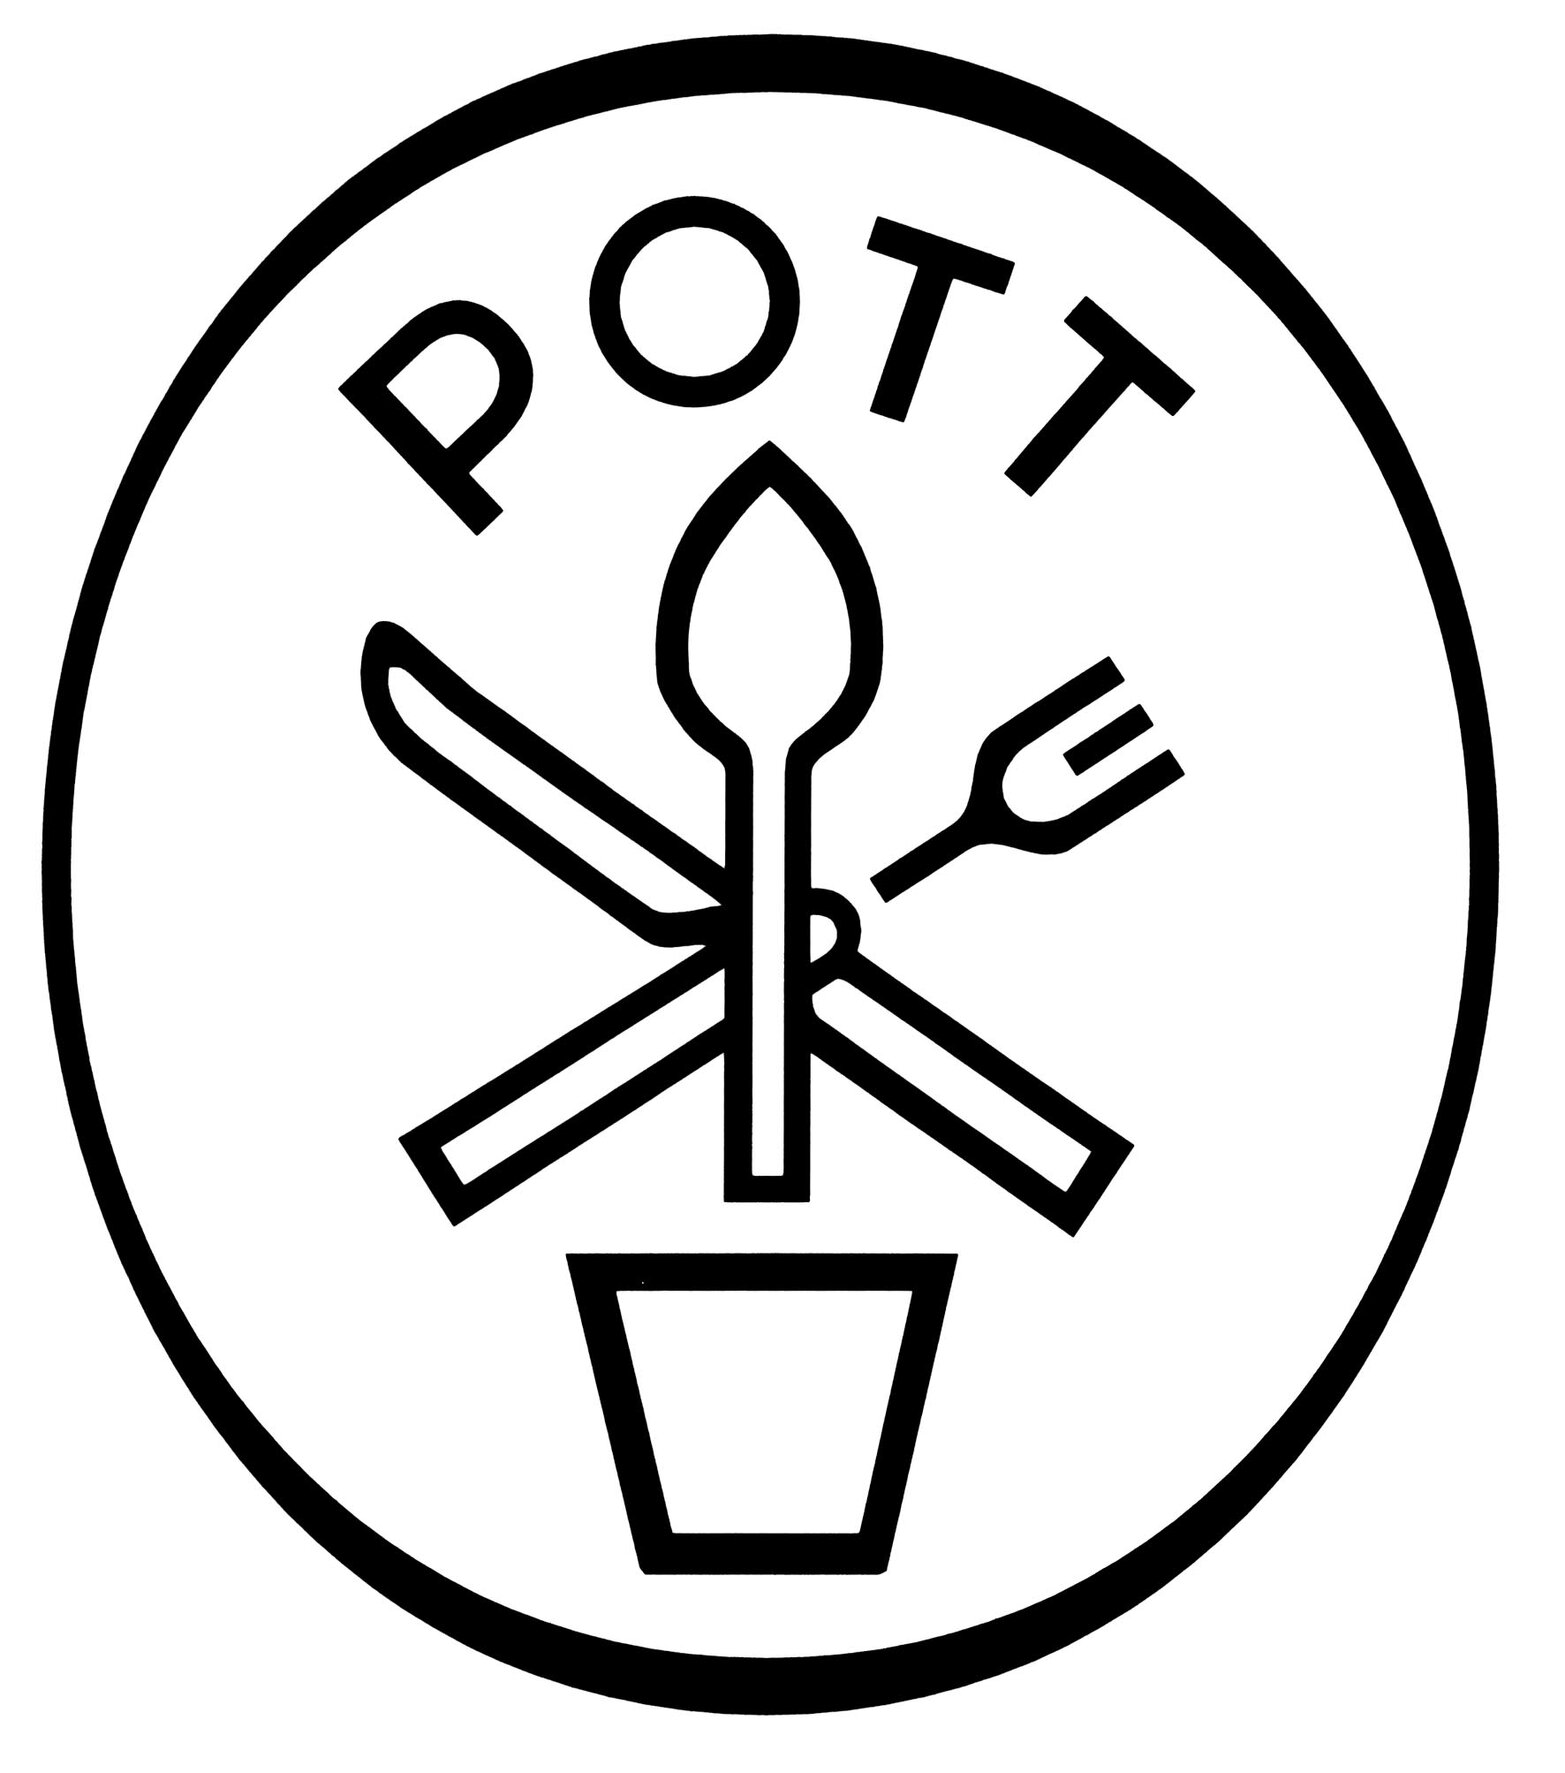 Pott logo